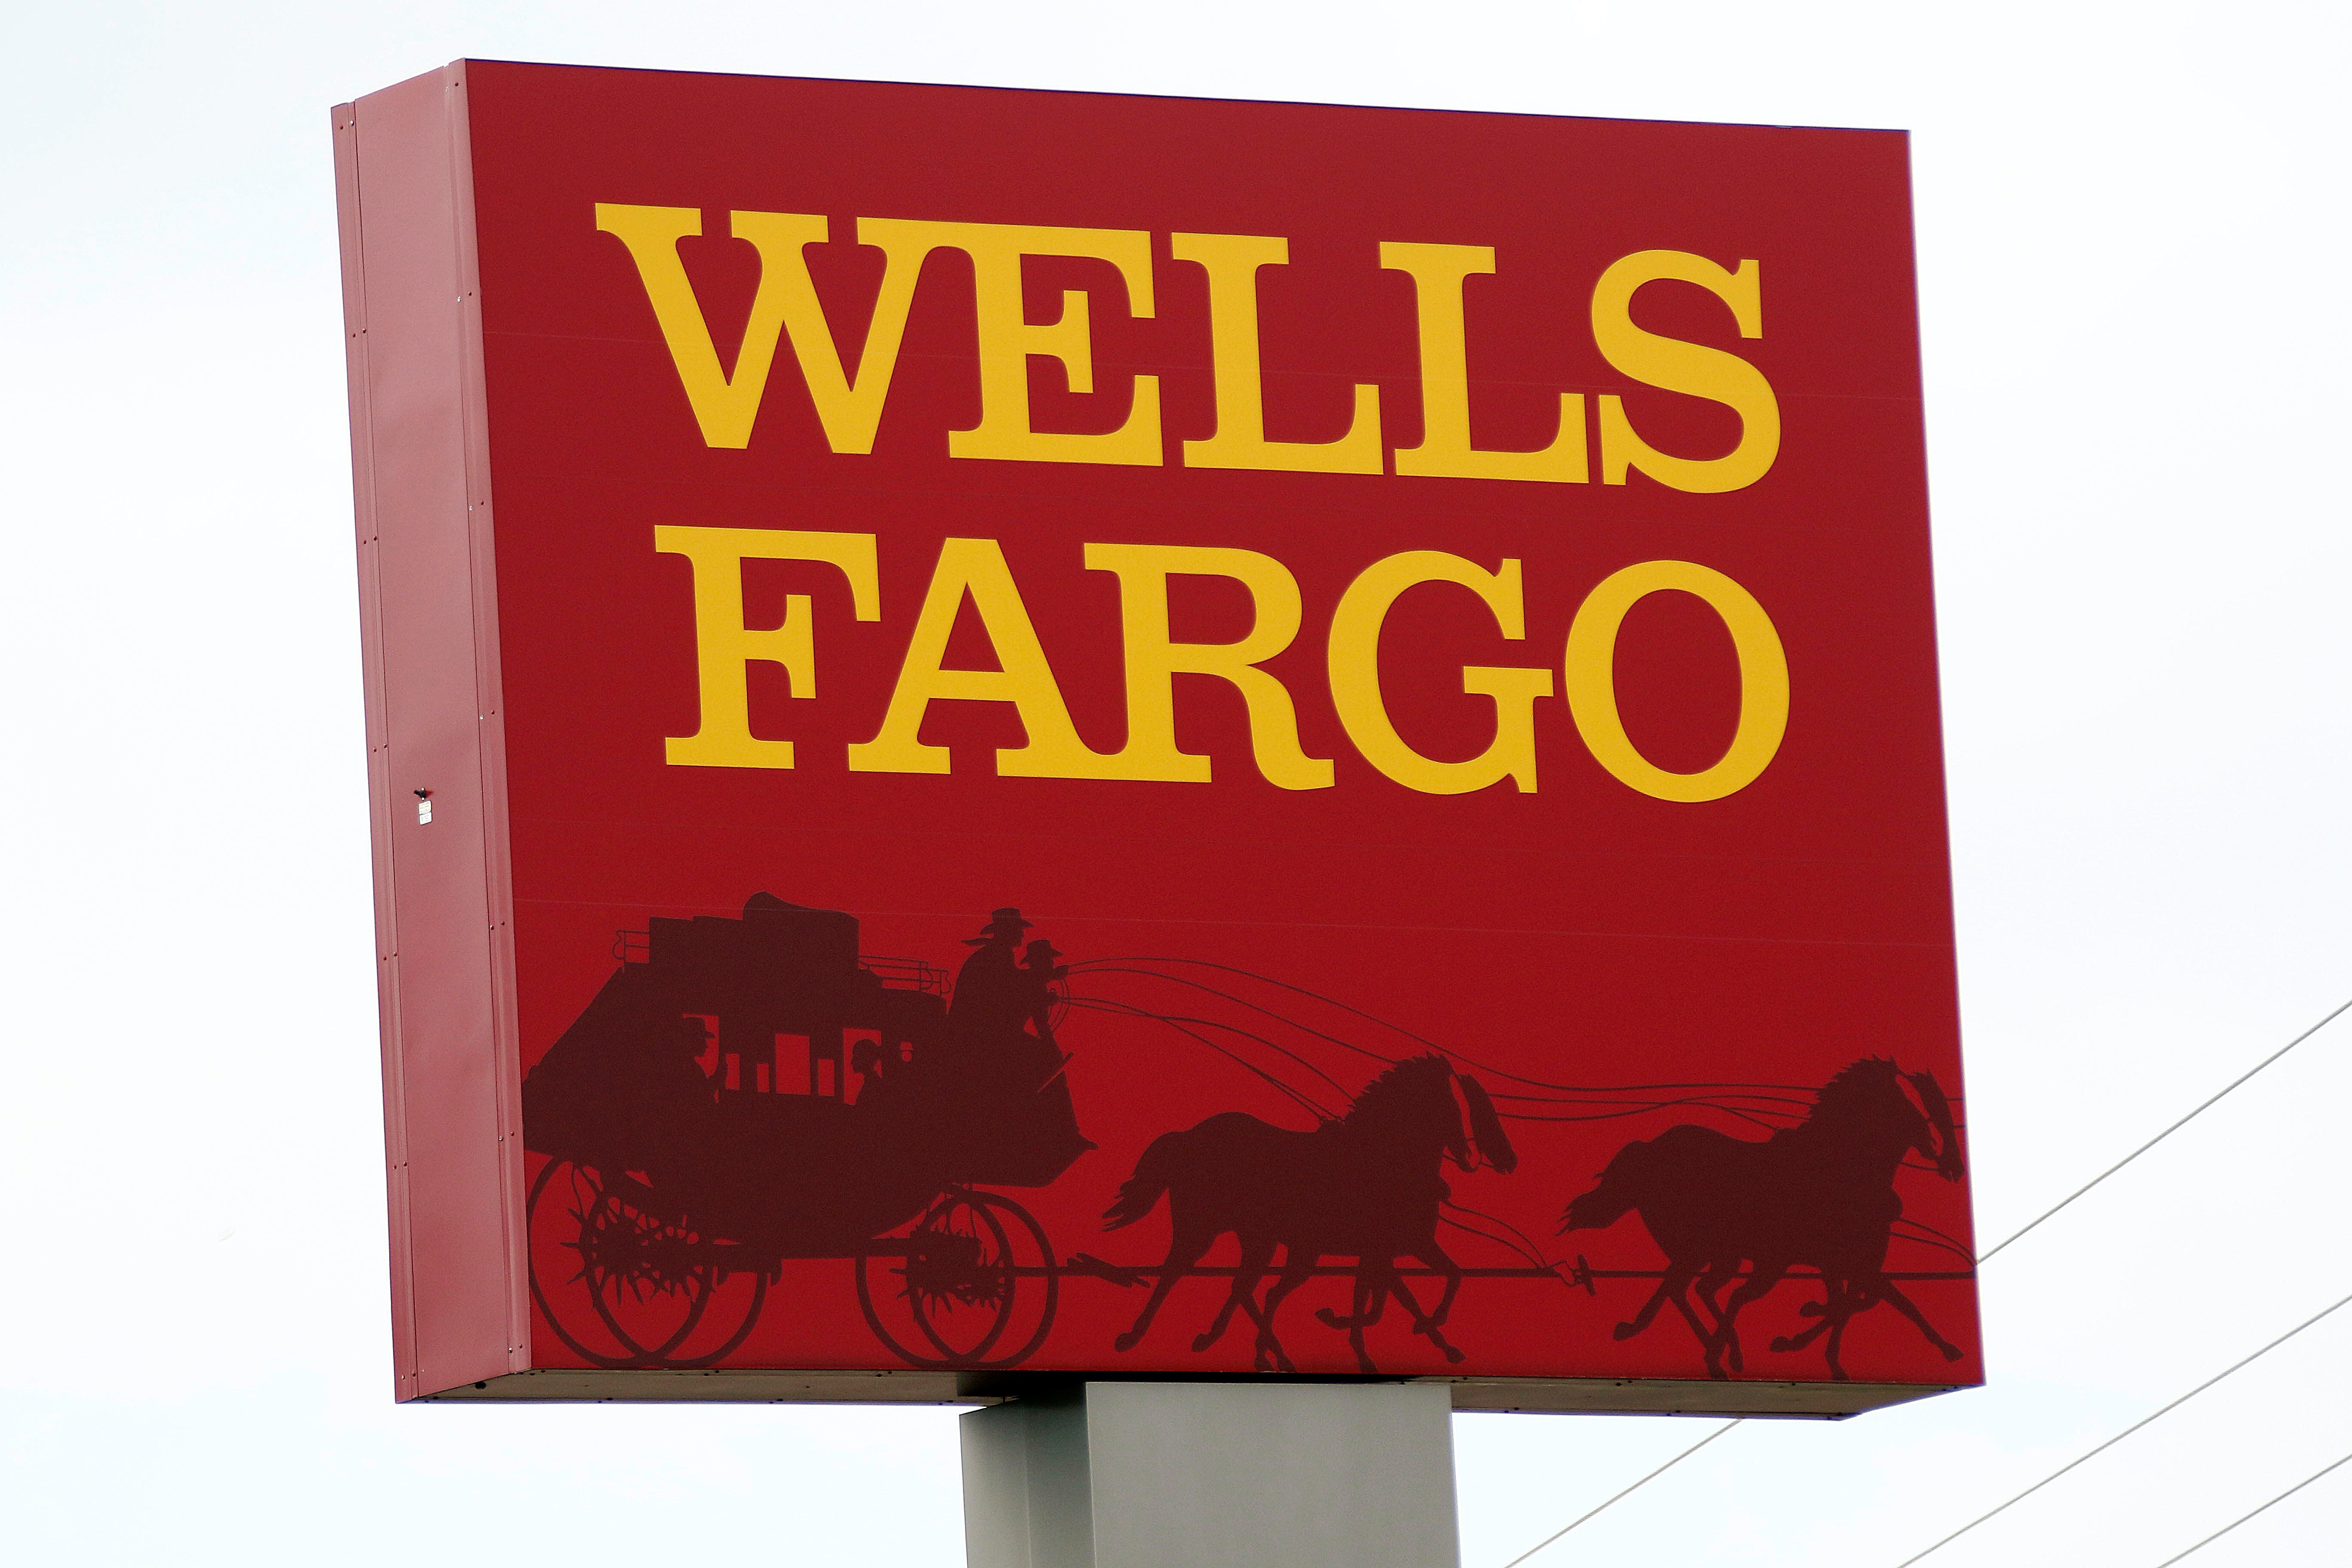 Wells Fargo fined $1 billion by regulators to settle auto-loan, mortgage abuses